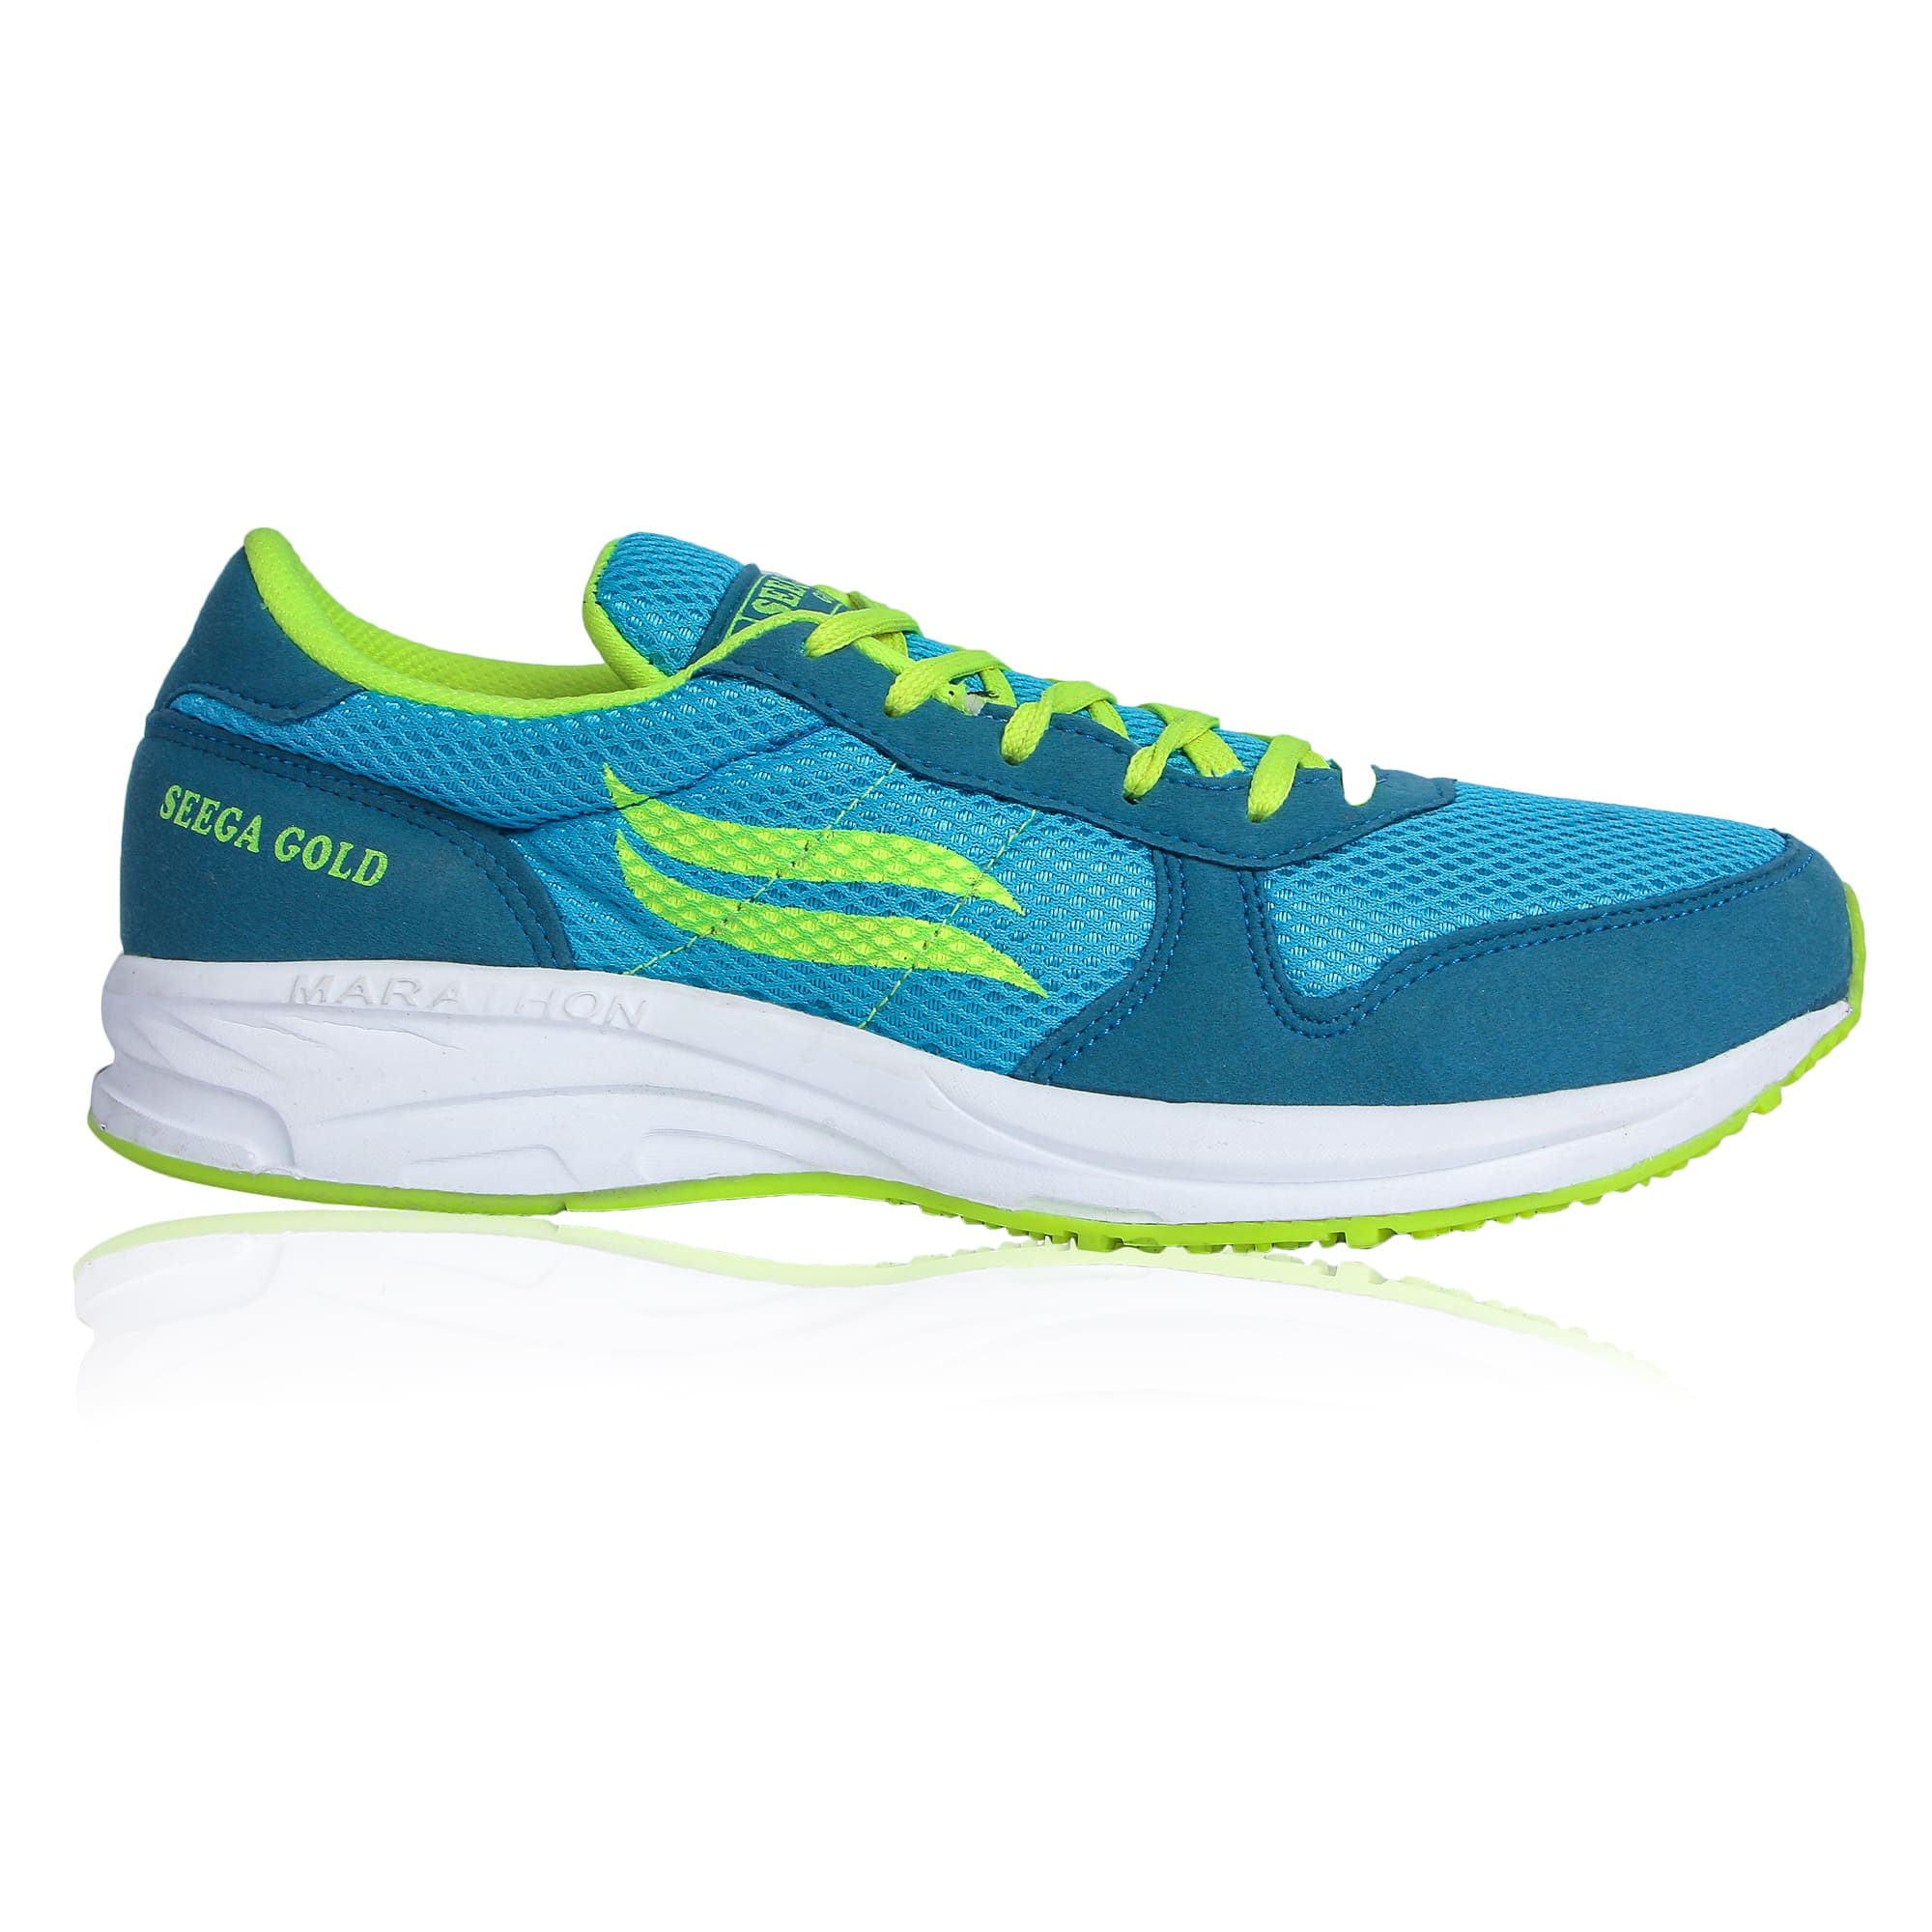 Seega Gold Marathon 01 Green Men Running Shoes Online Store For Men Footwear In India